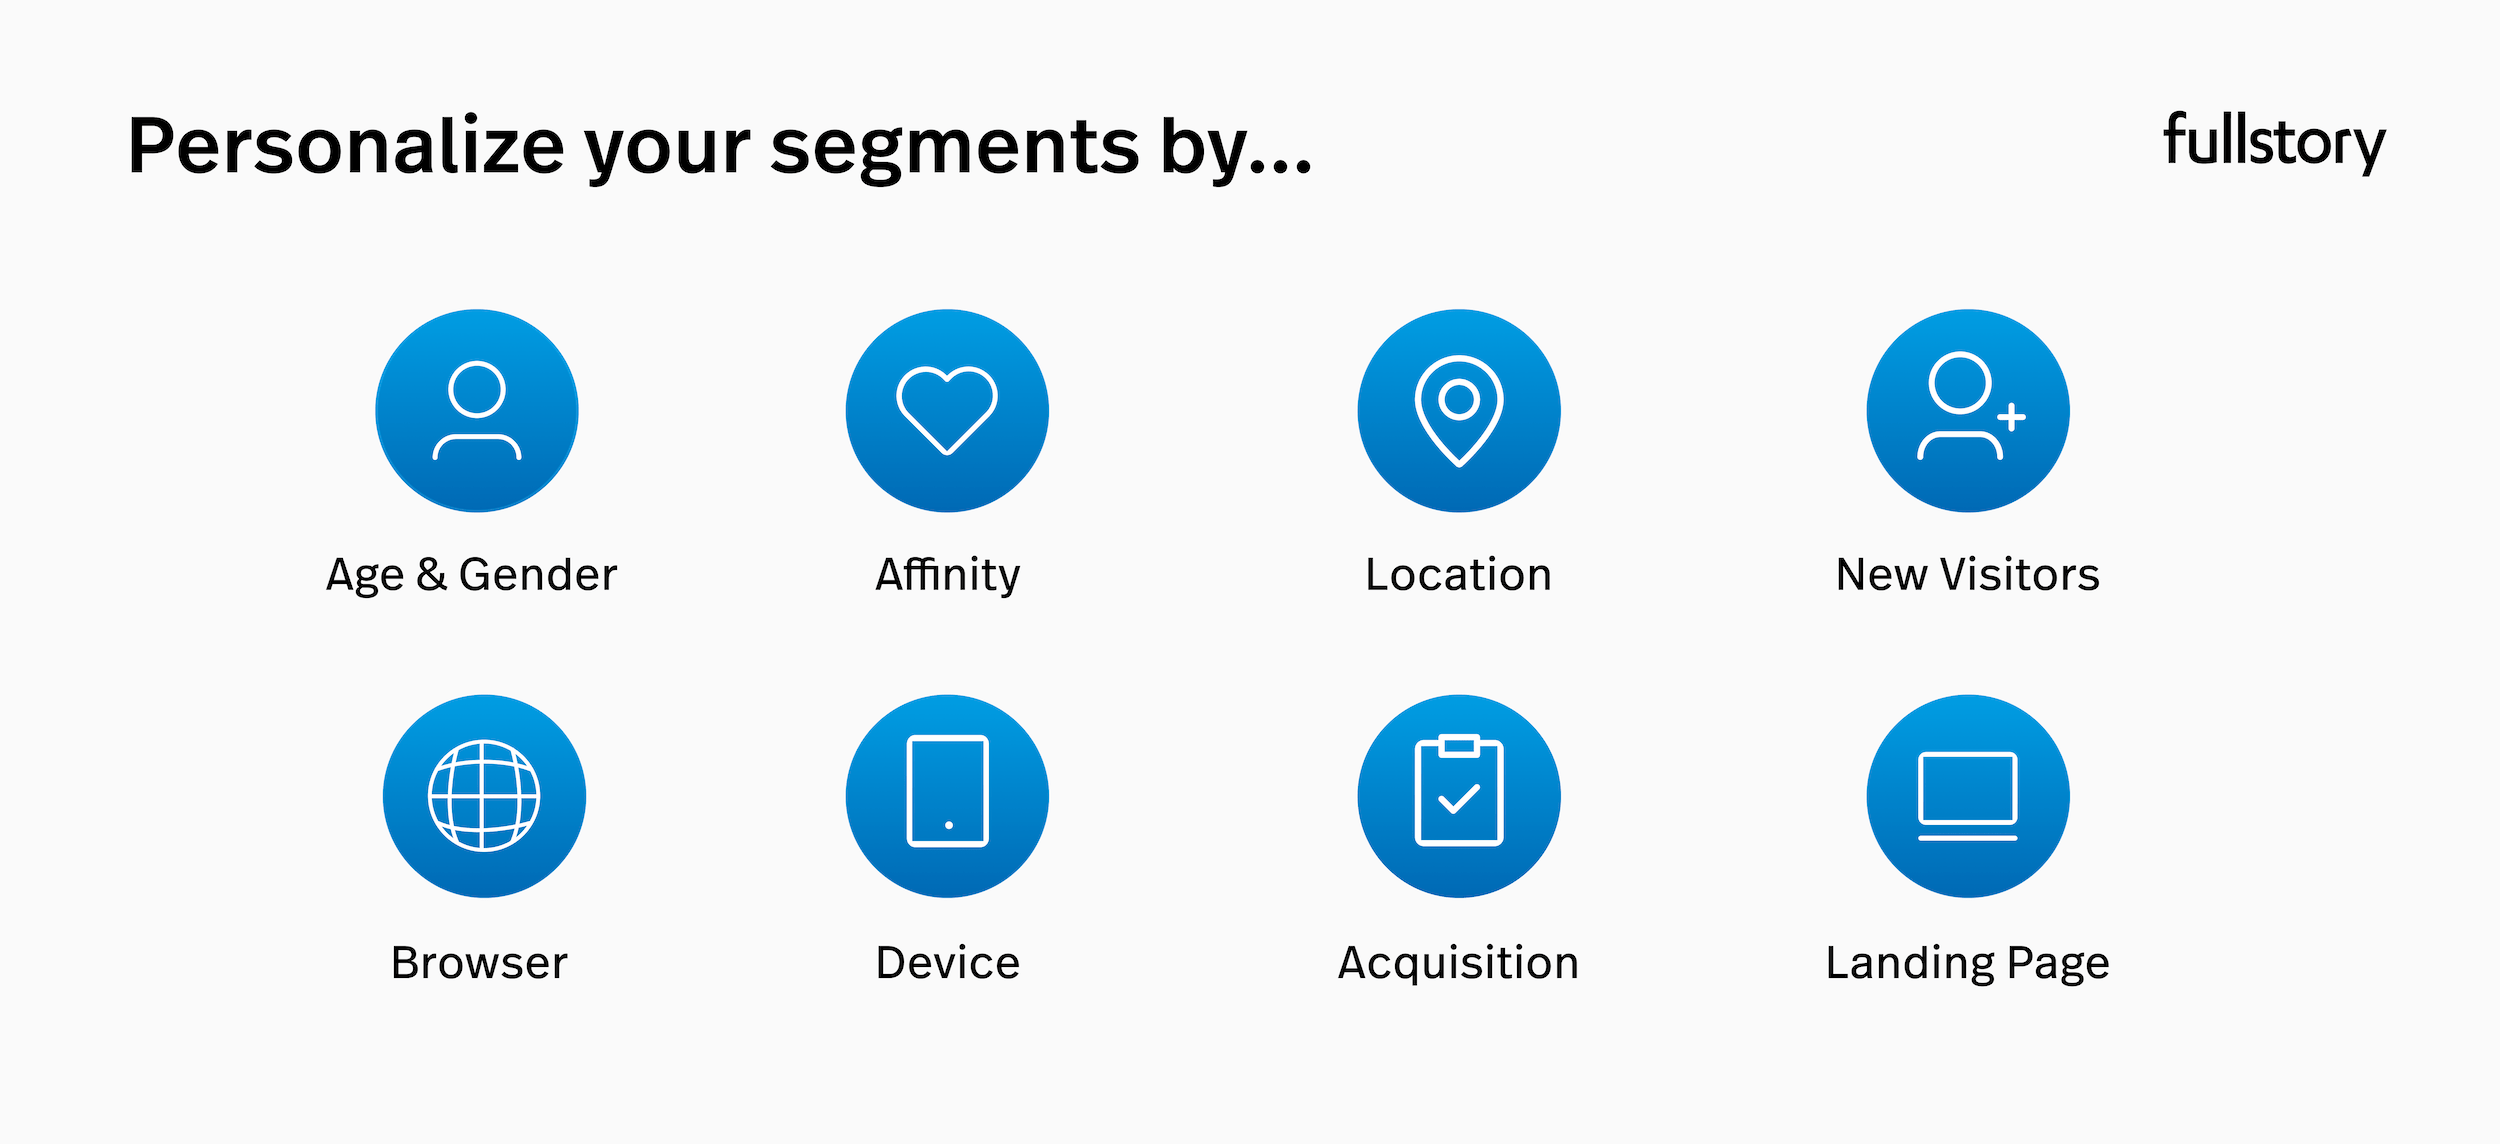 Personalize your segments